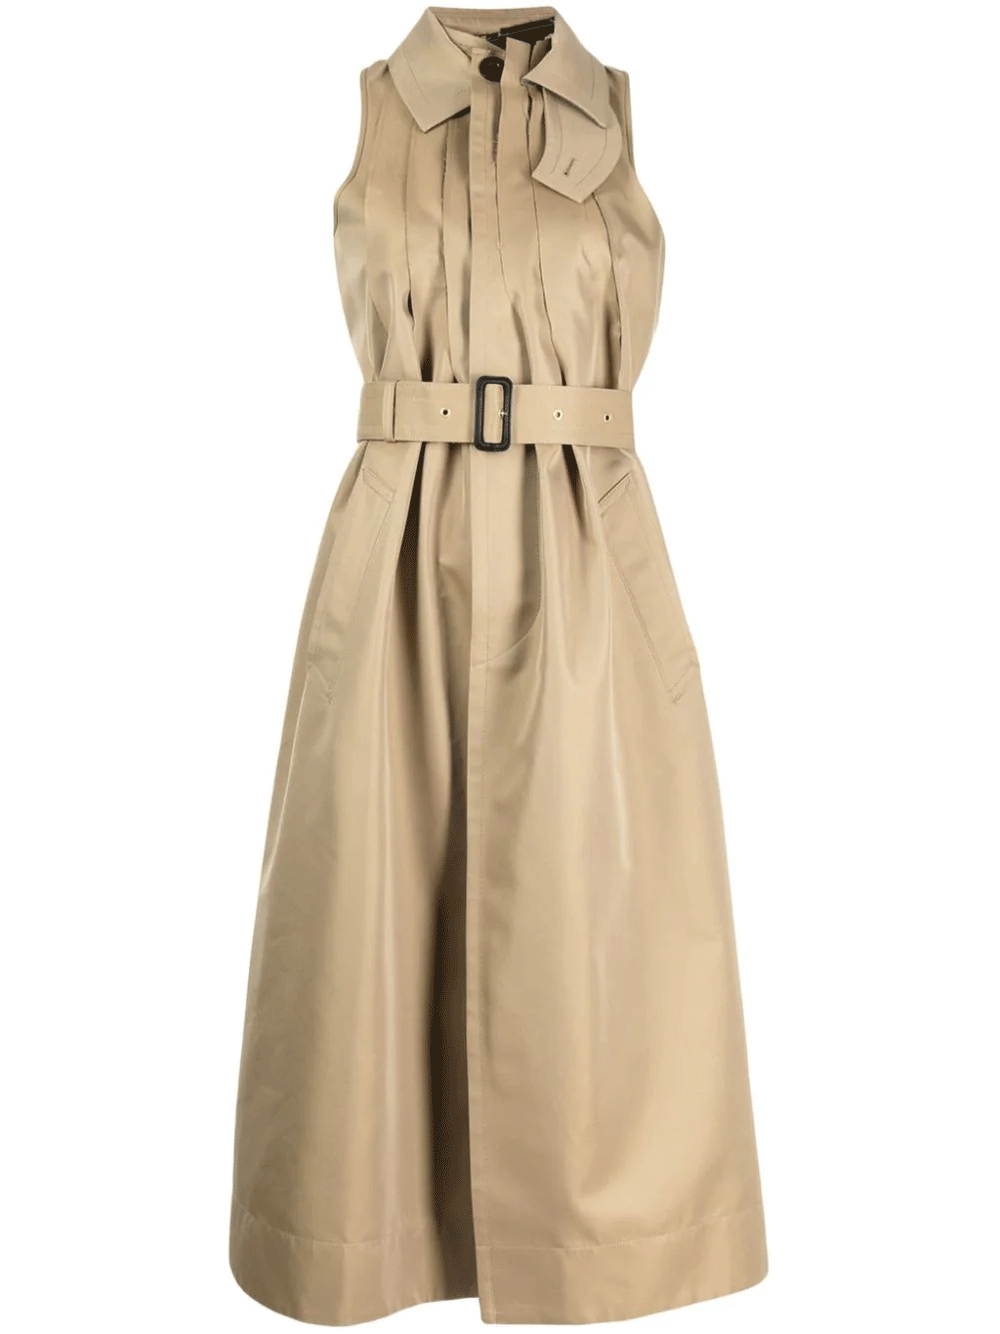 sacai-Cotton-Gabardine-Coat-Dress-Beige-1